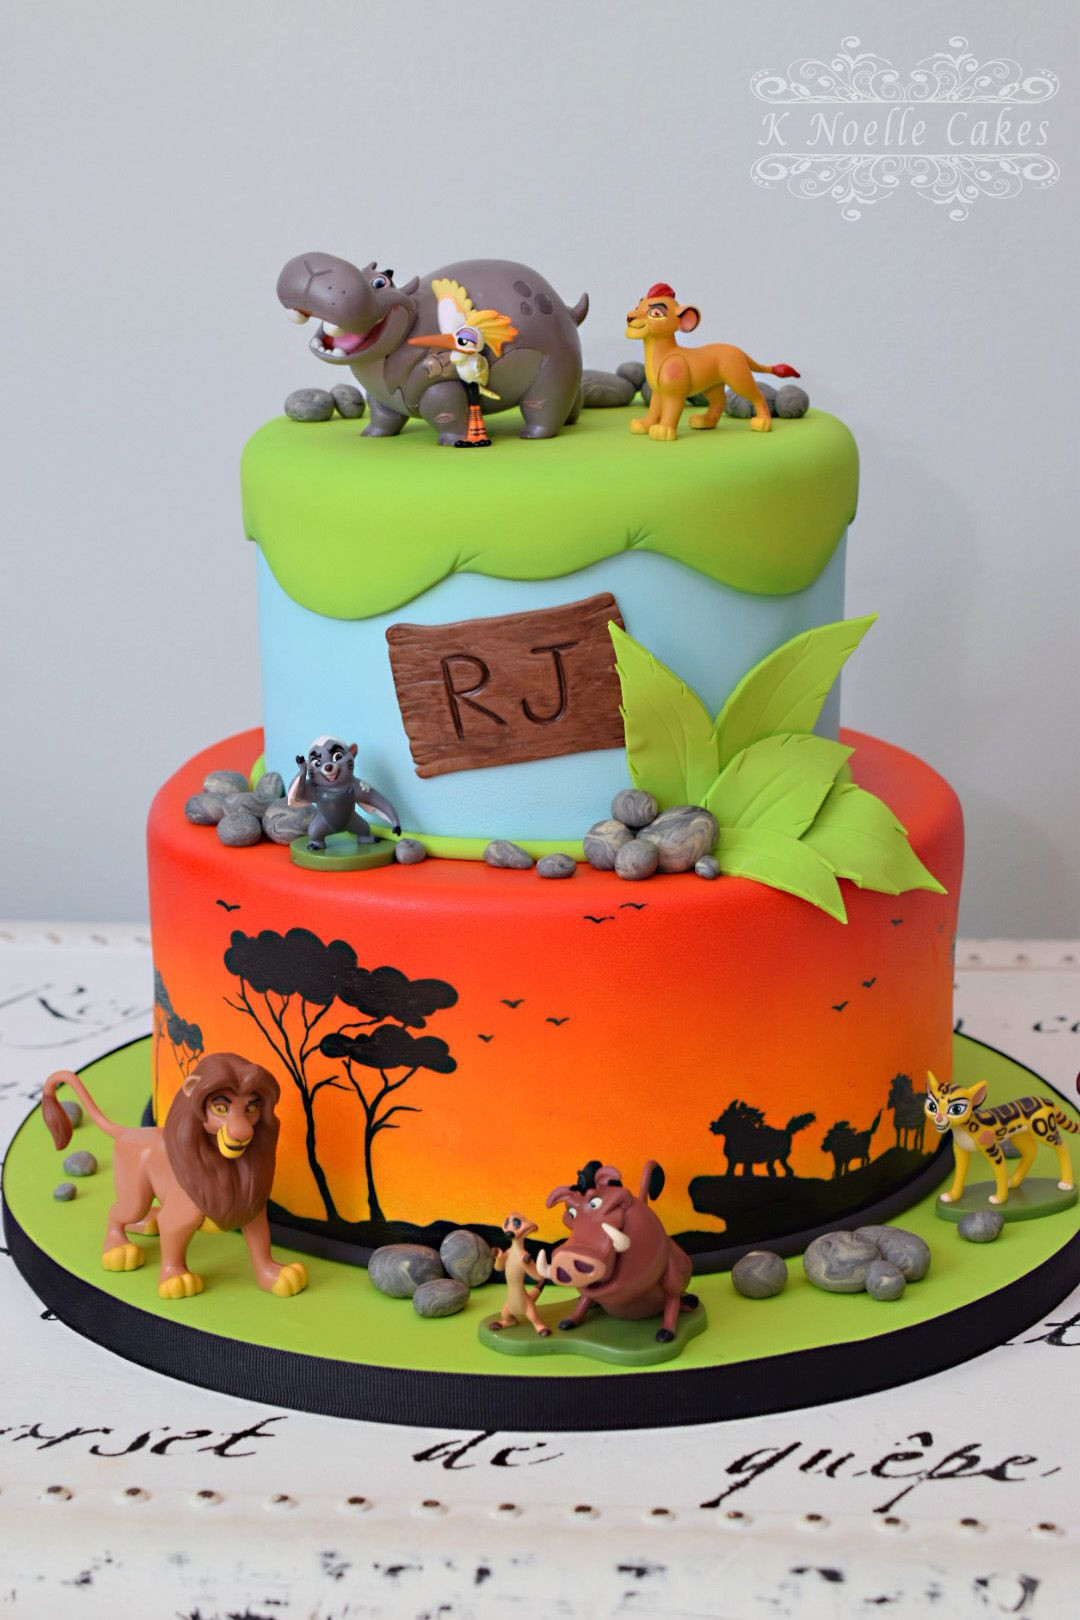 Lion King Birthday Cake
 Lion Guard Lion King theme cake by K Noelle Cakes